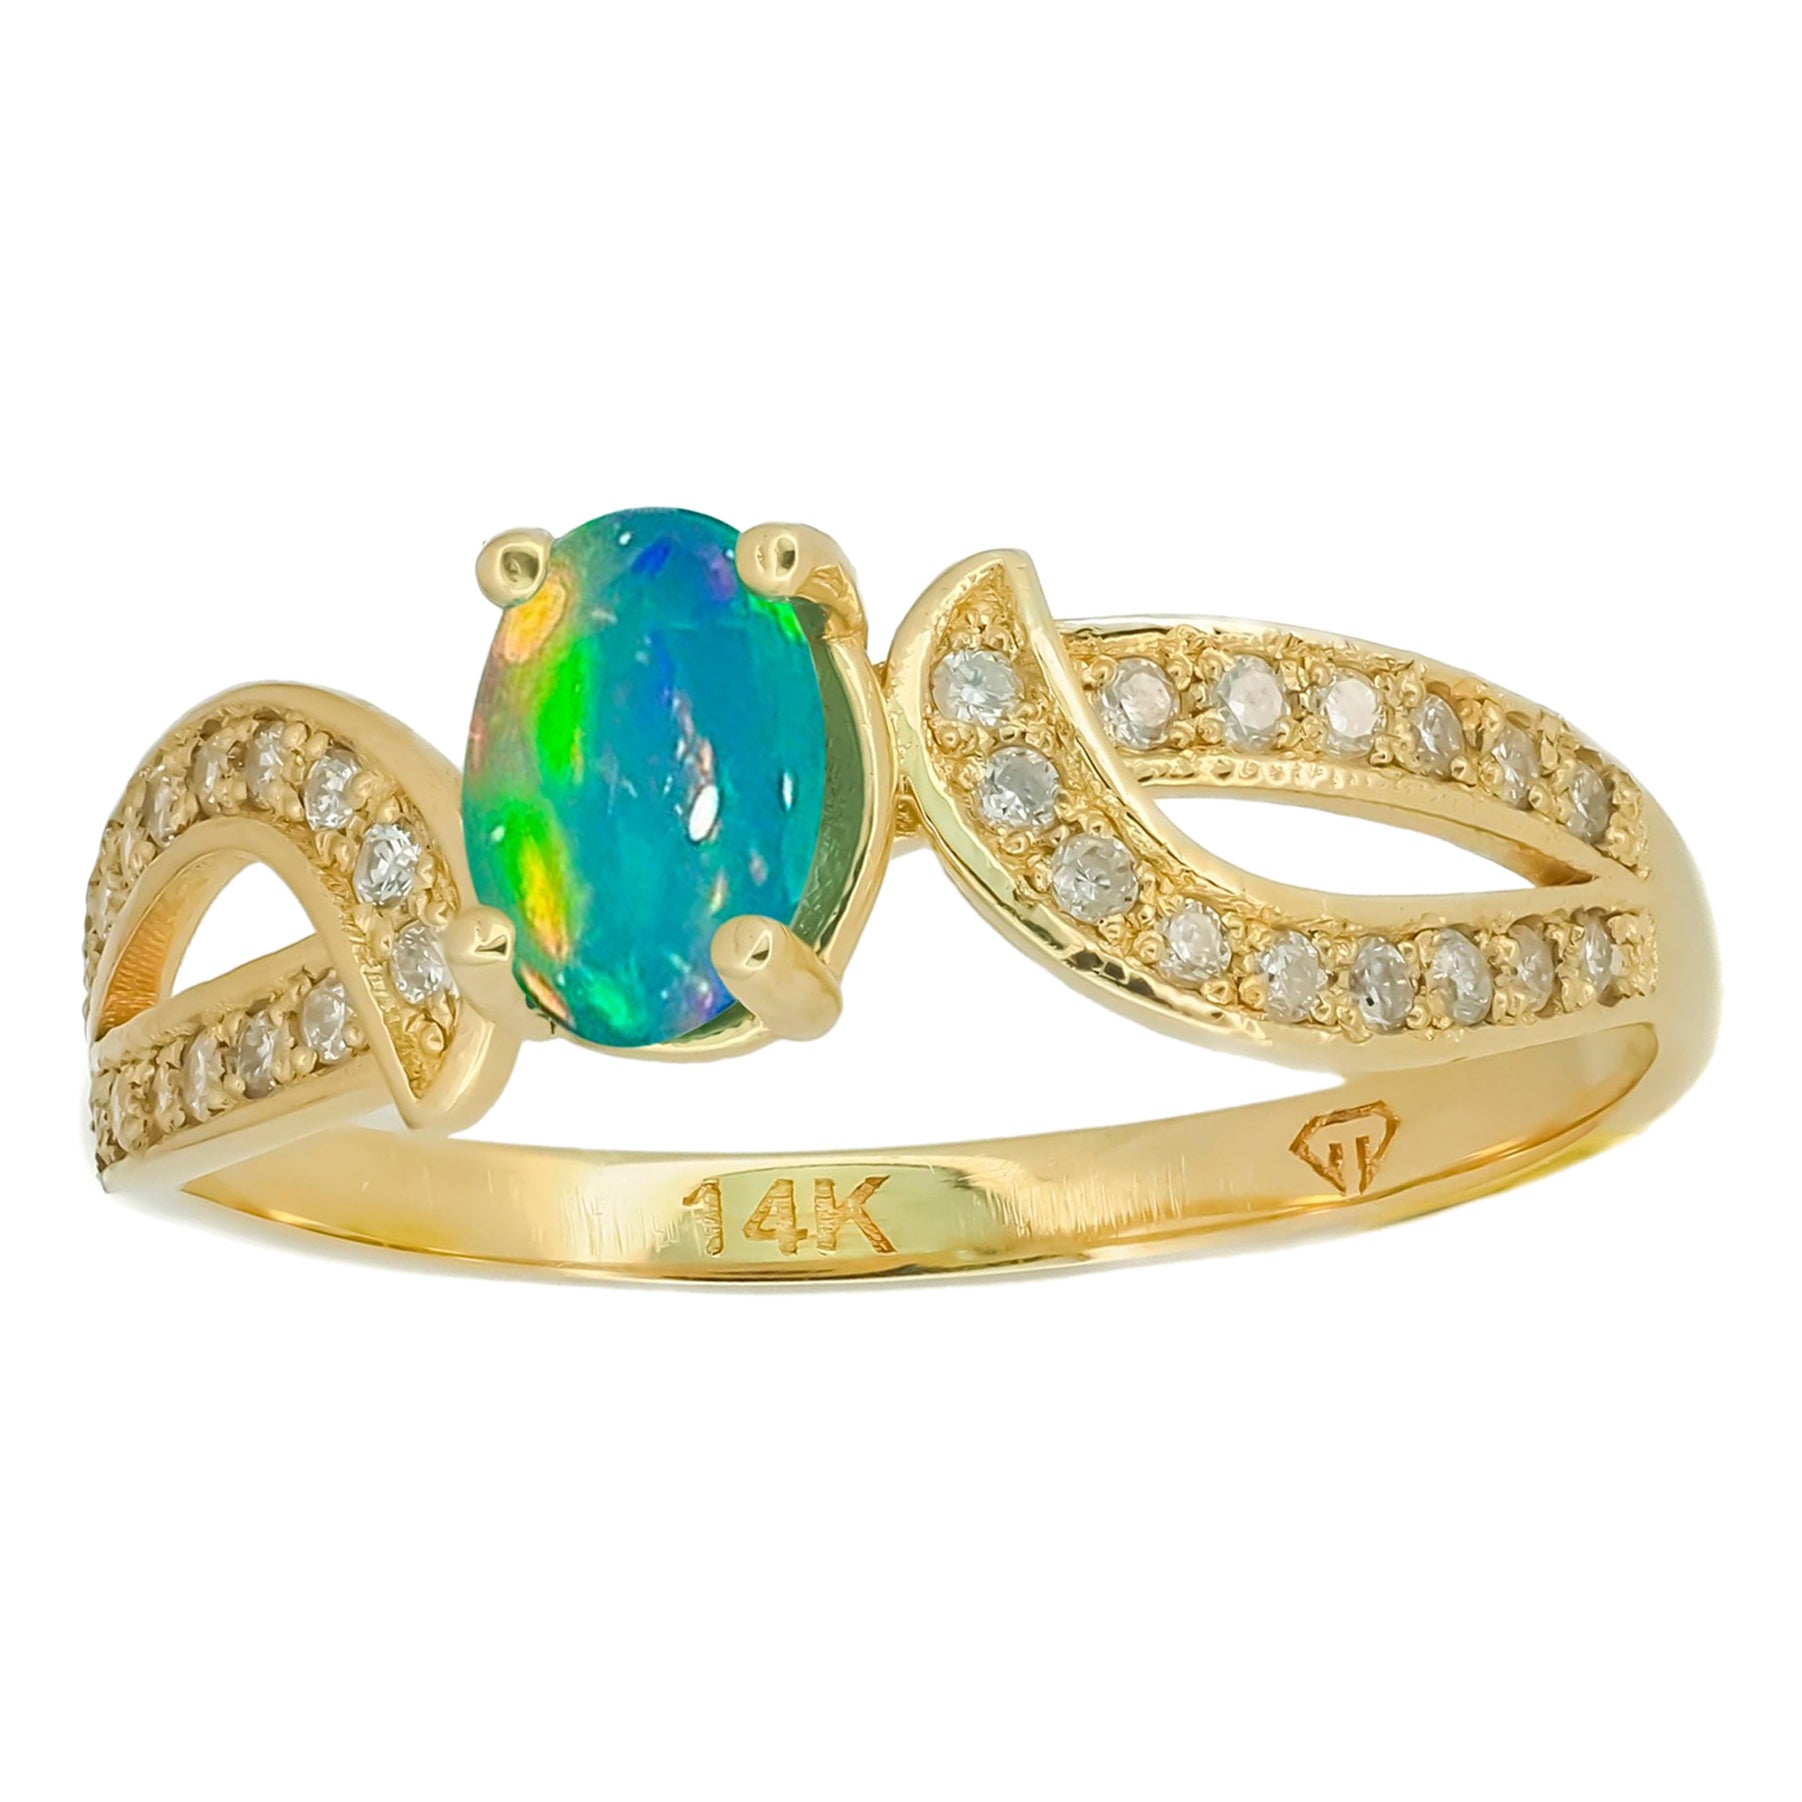 Genuine opal 14k gold ring. 